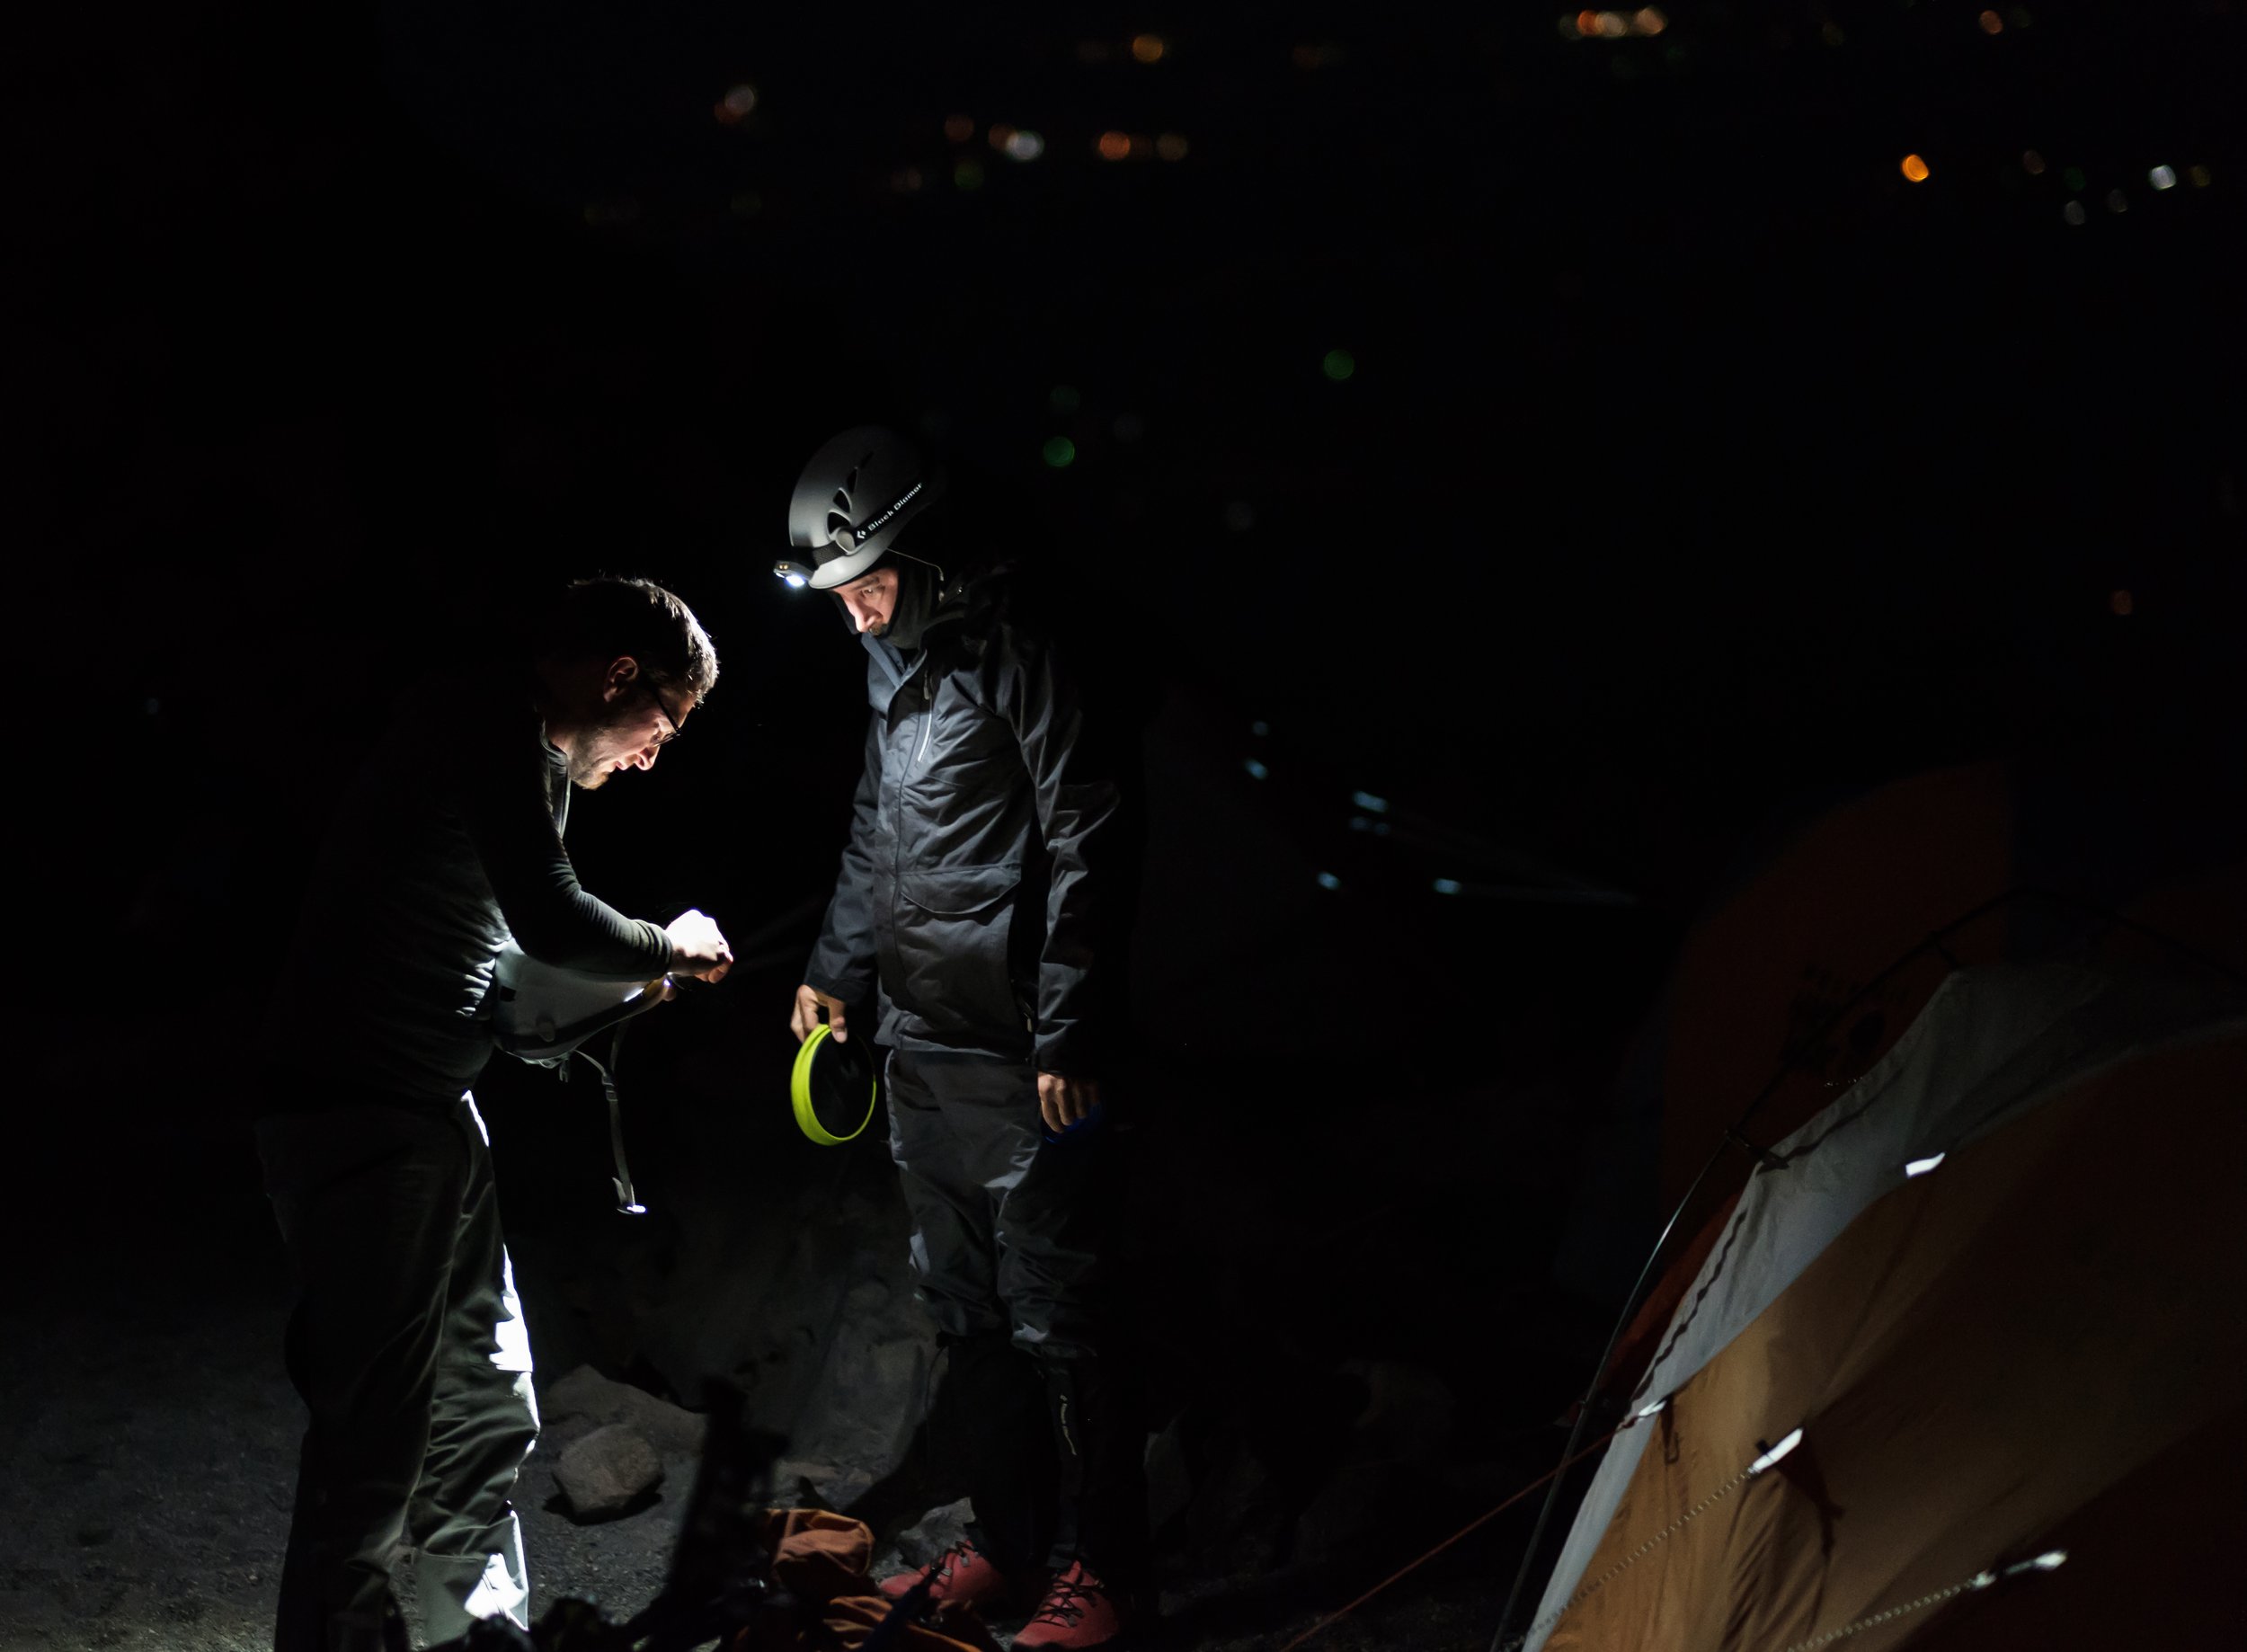 Climbers prepare to climb mt. Shasta in the dark.